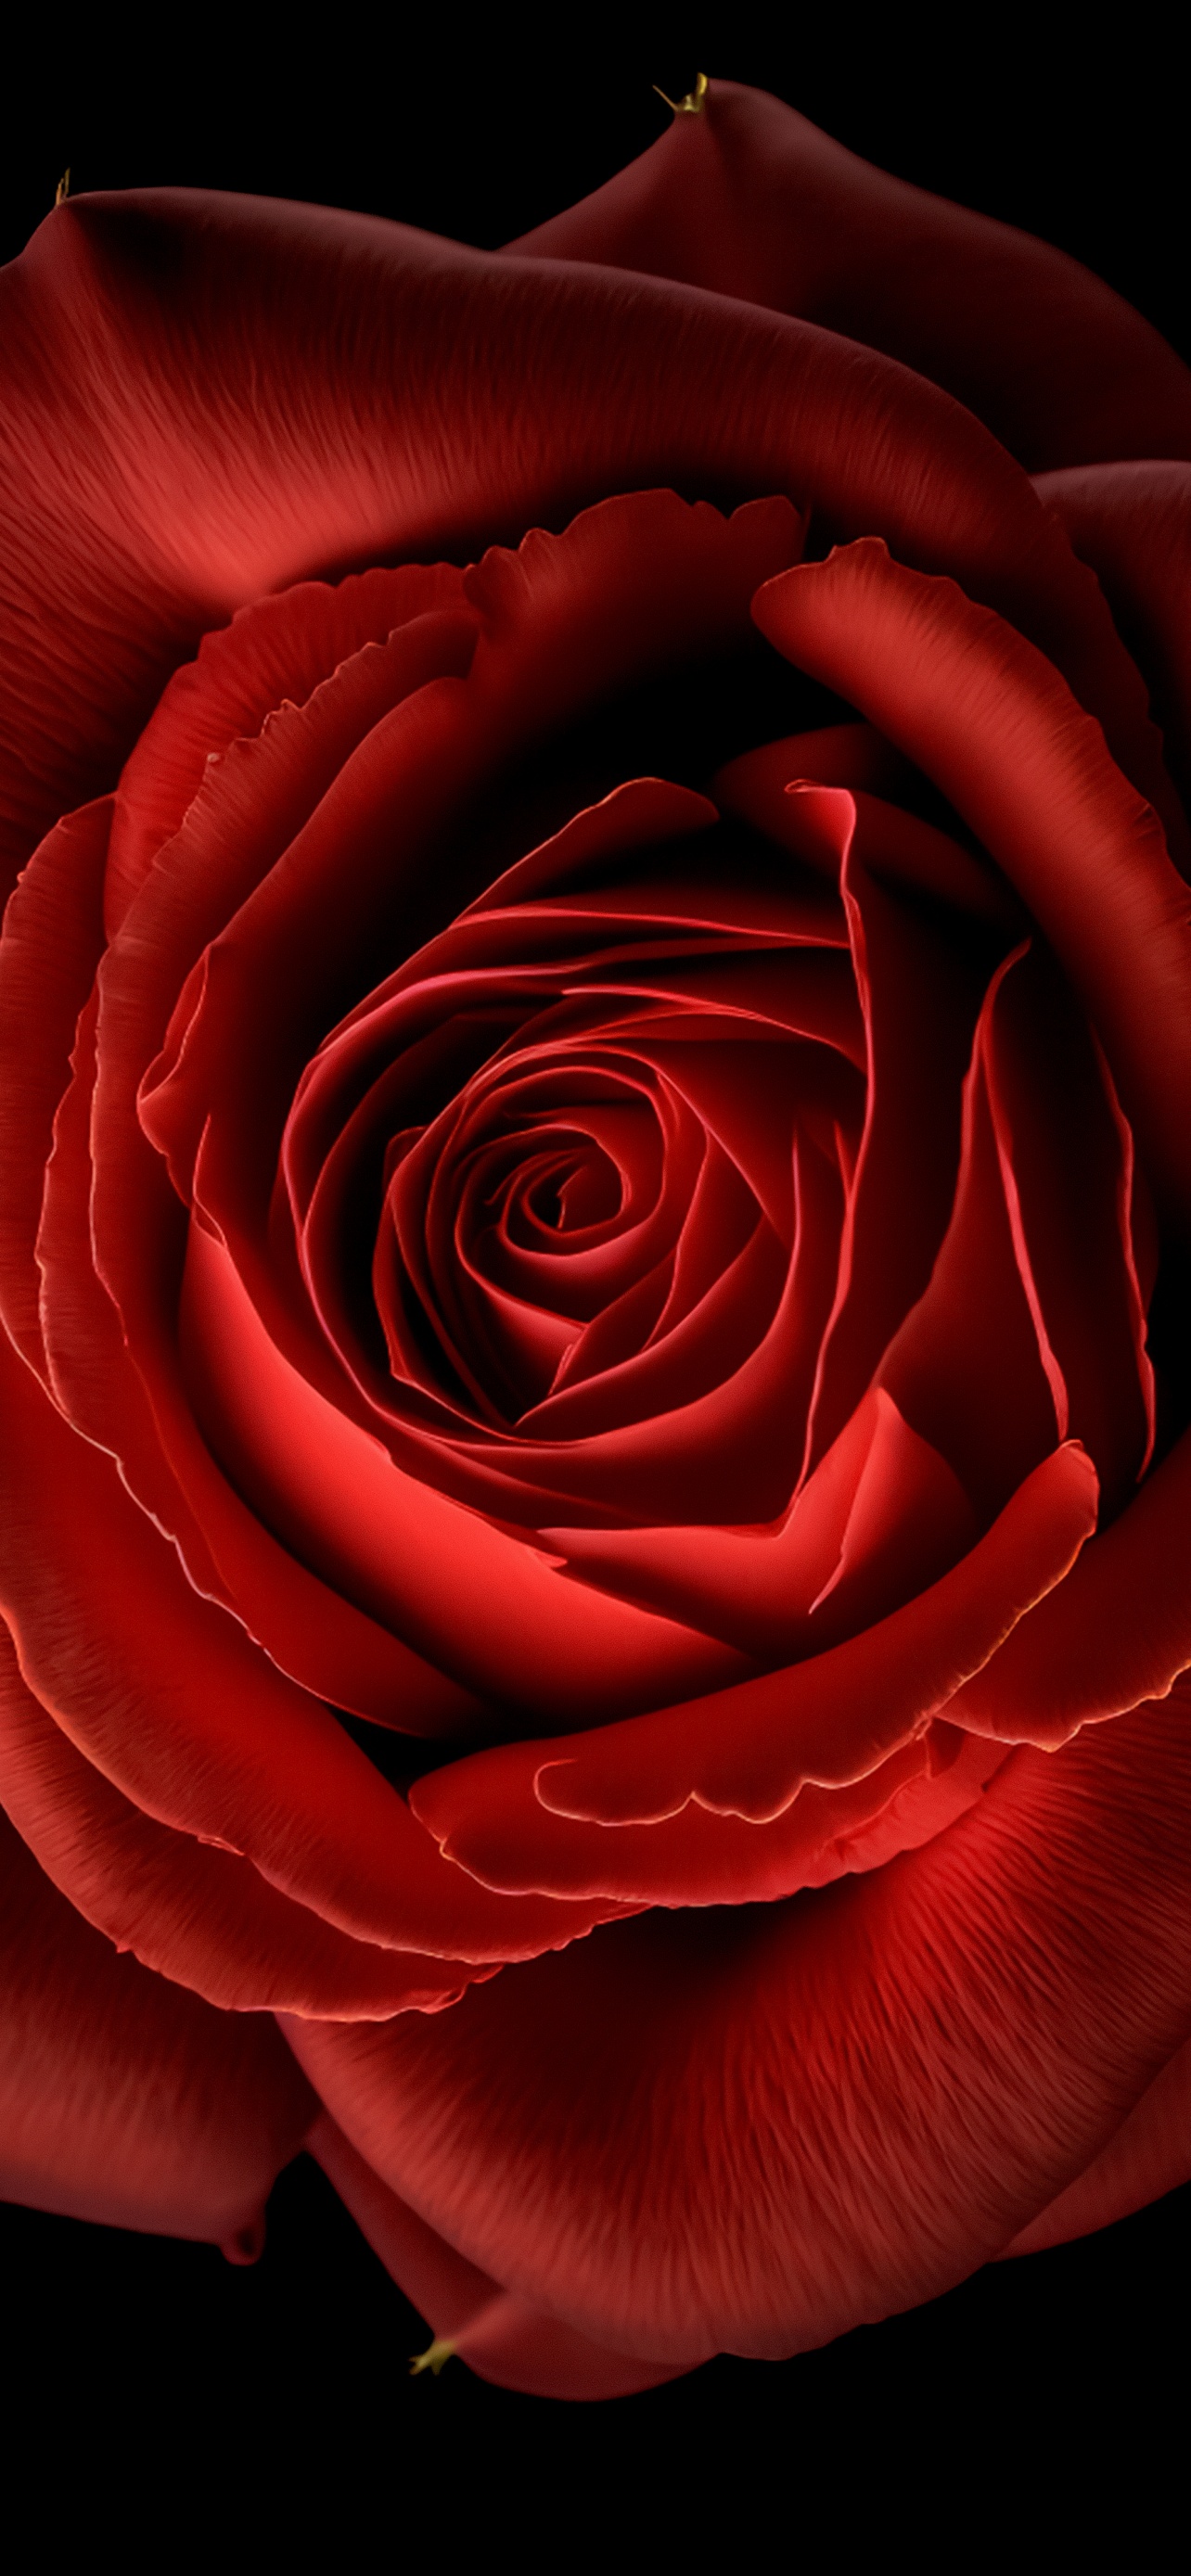 Roses flower, Roses photos, roses wallpaper for your desktop - Red Rose,  White Rose, Orange Rose, Pink